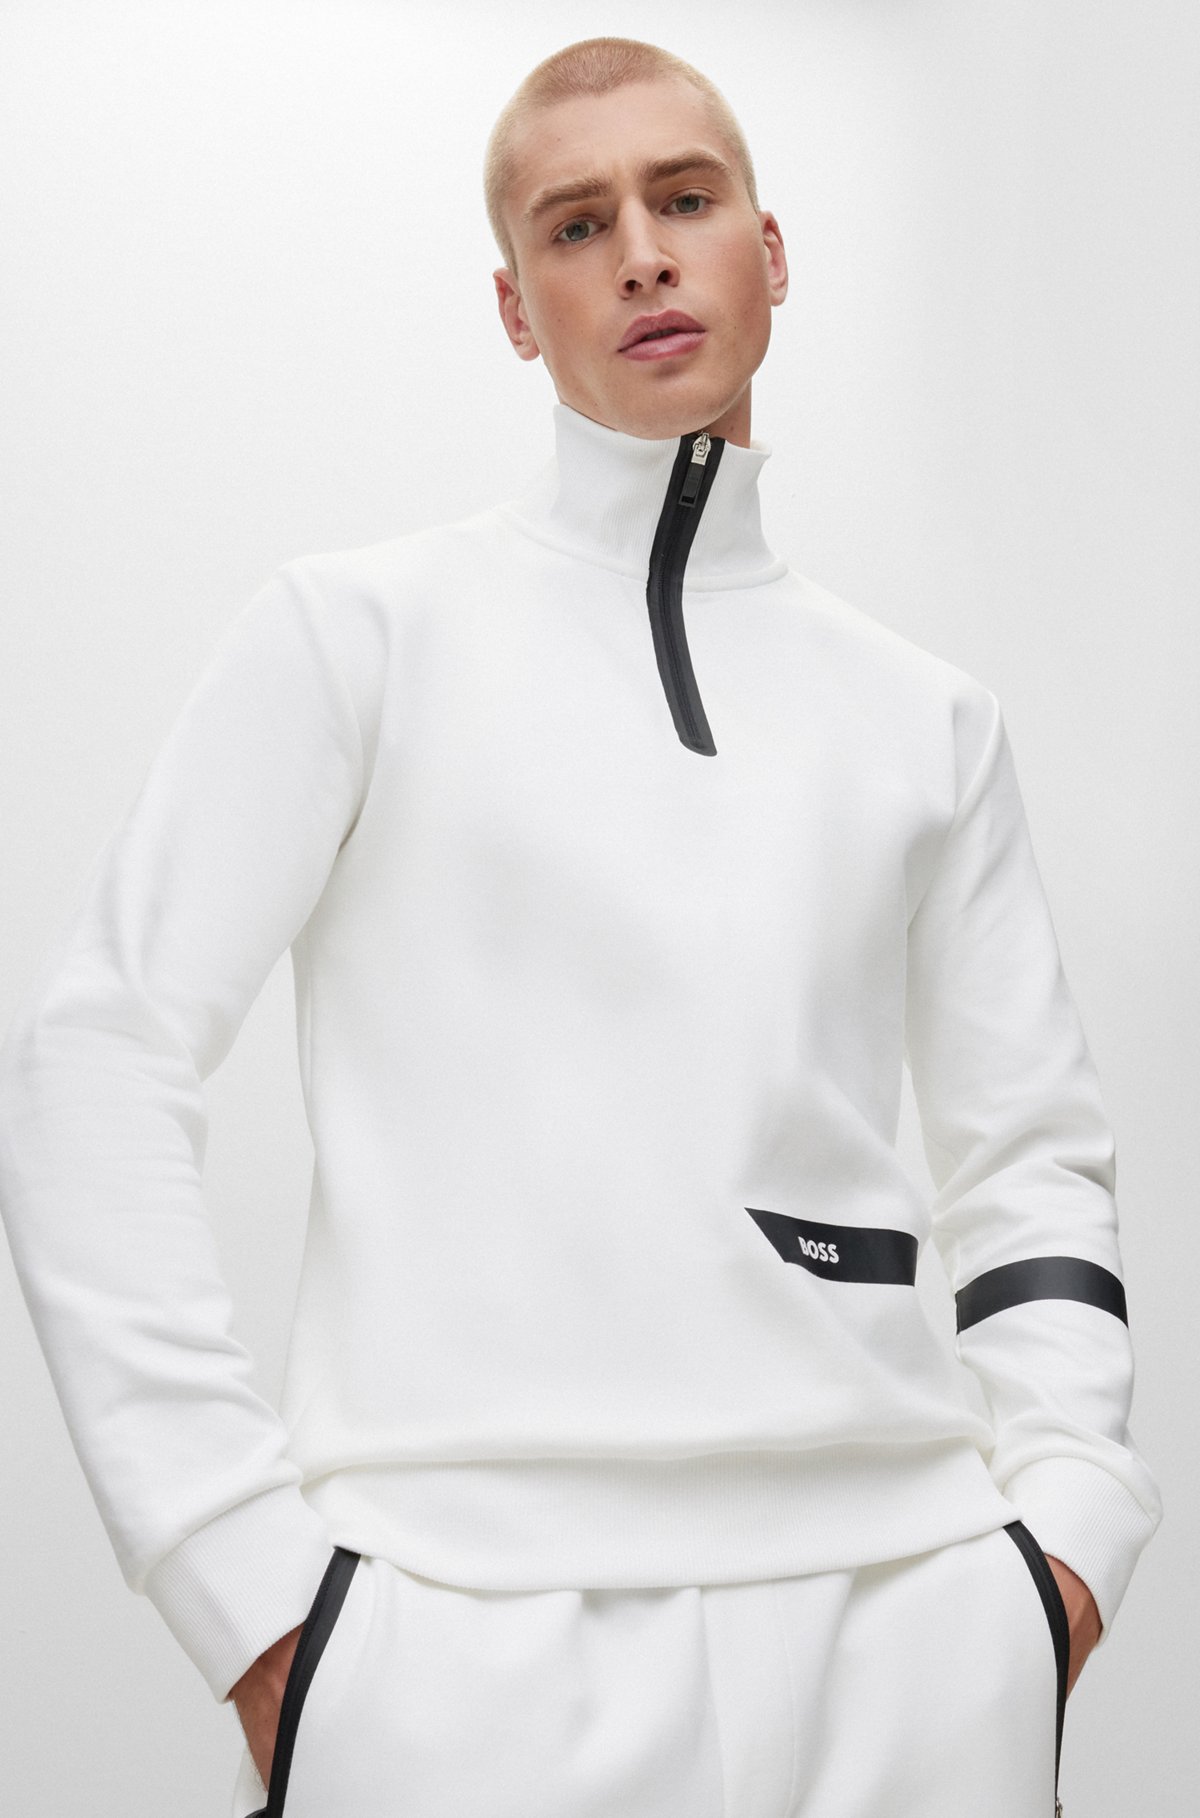 BOSS - Cotton-blend zip-neck sweatshirt with logo stripe